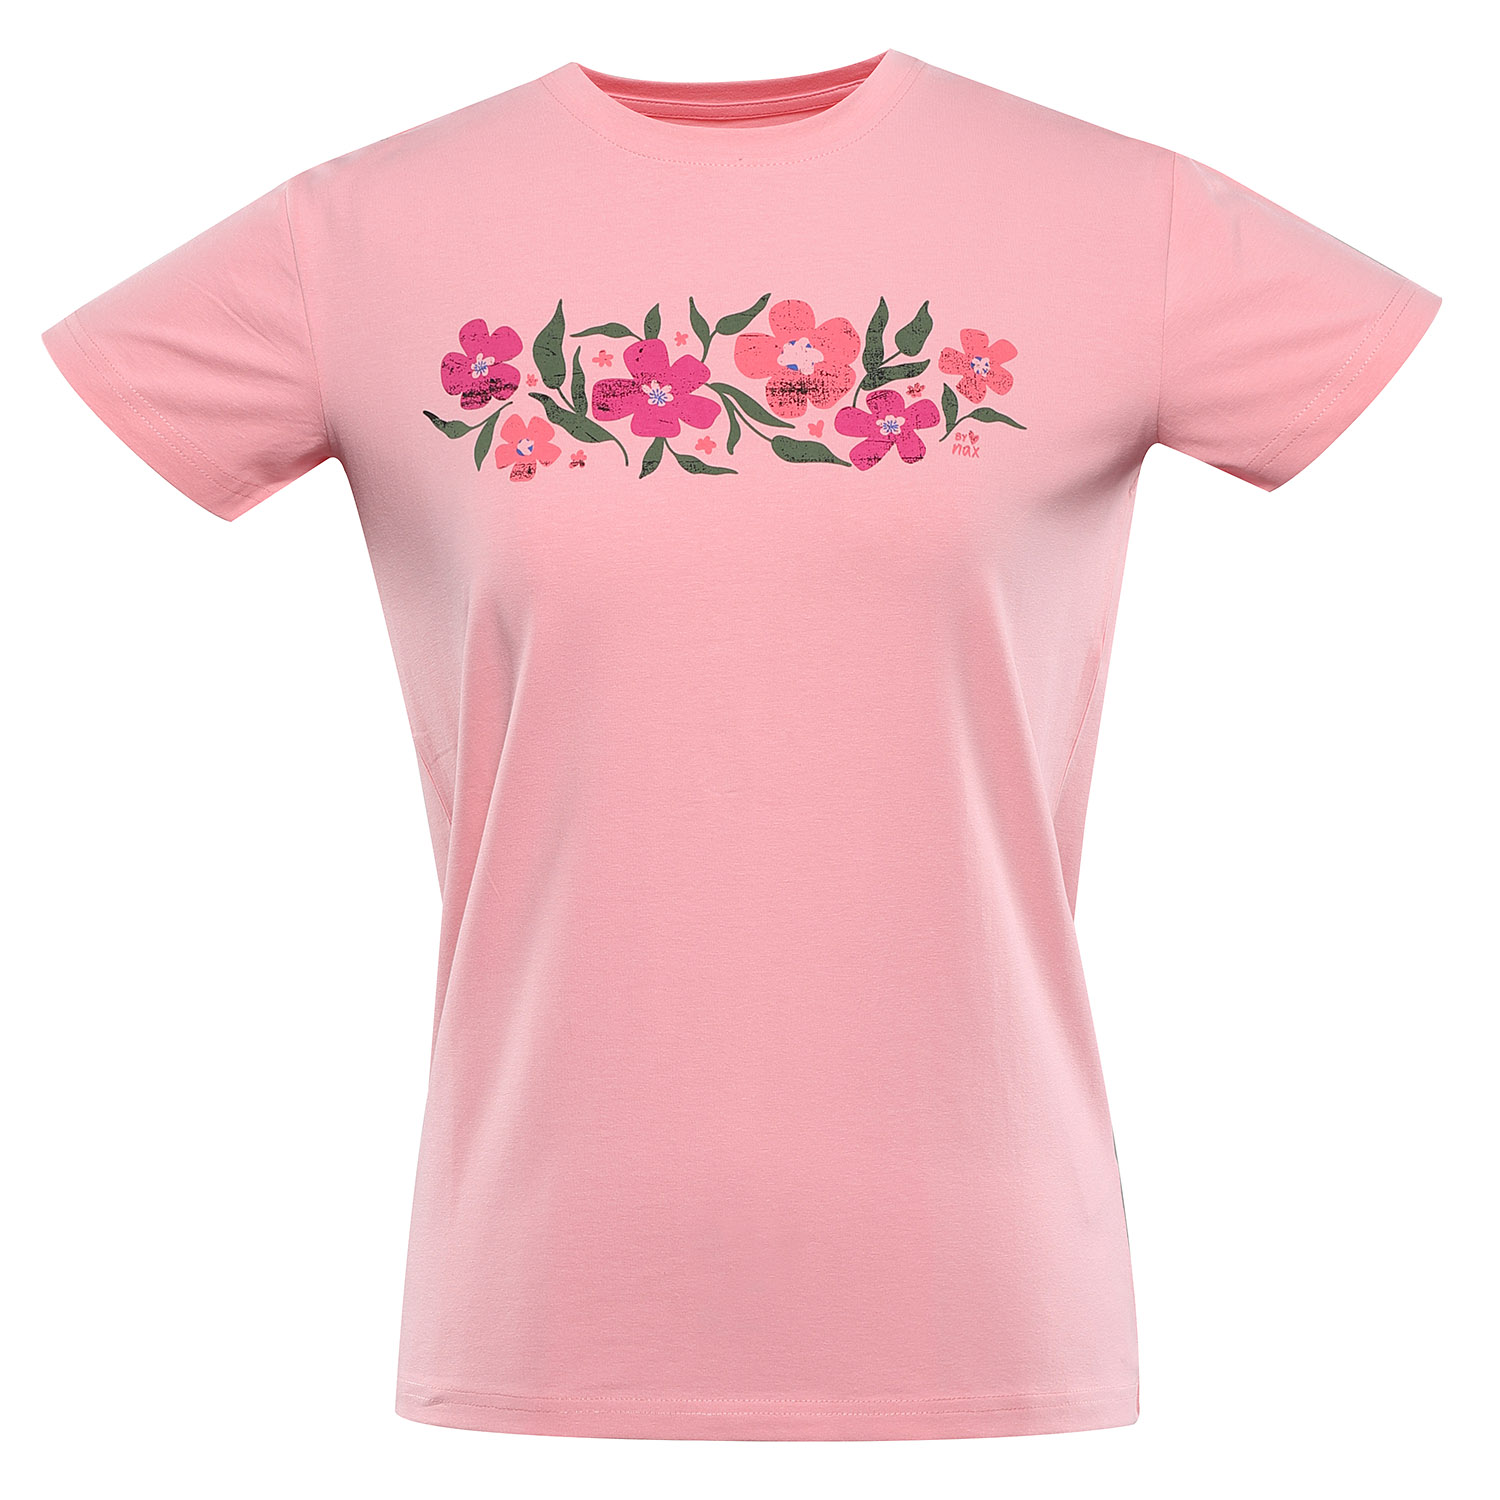 Women's T-shirt nax NAX NERGA candy pink